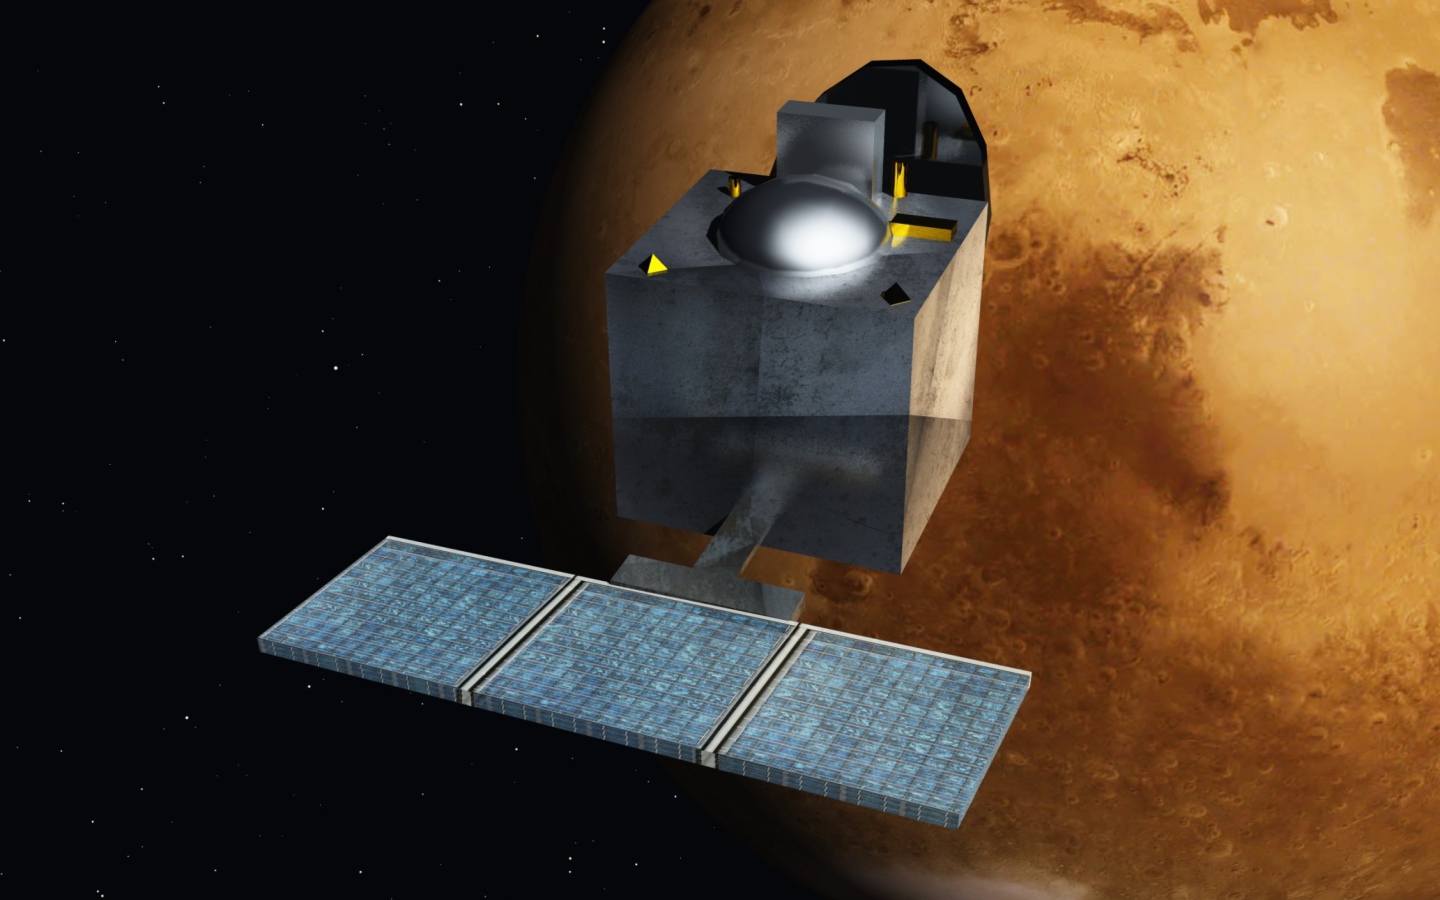 Indian spacecraft to Mars orbit Mangalyaan